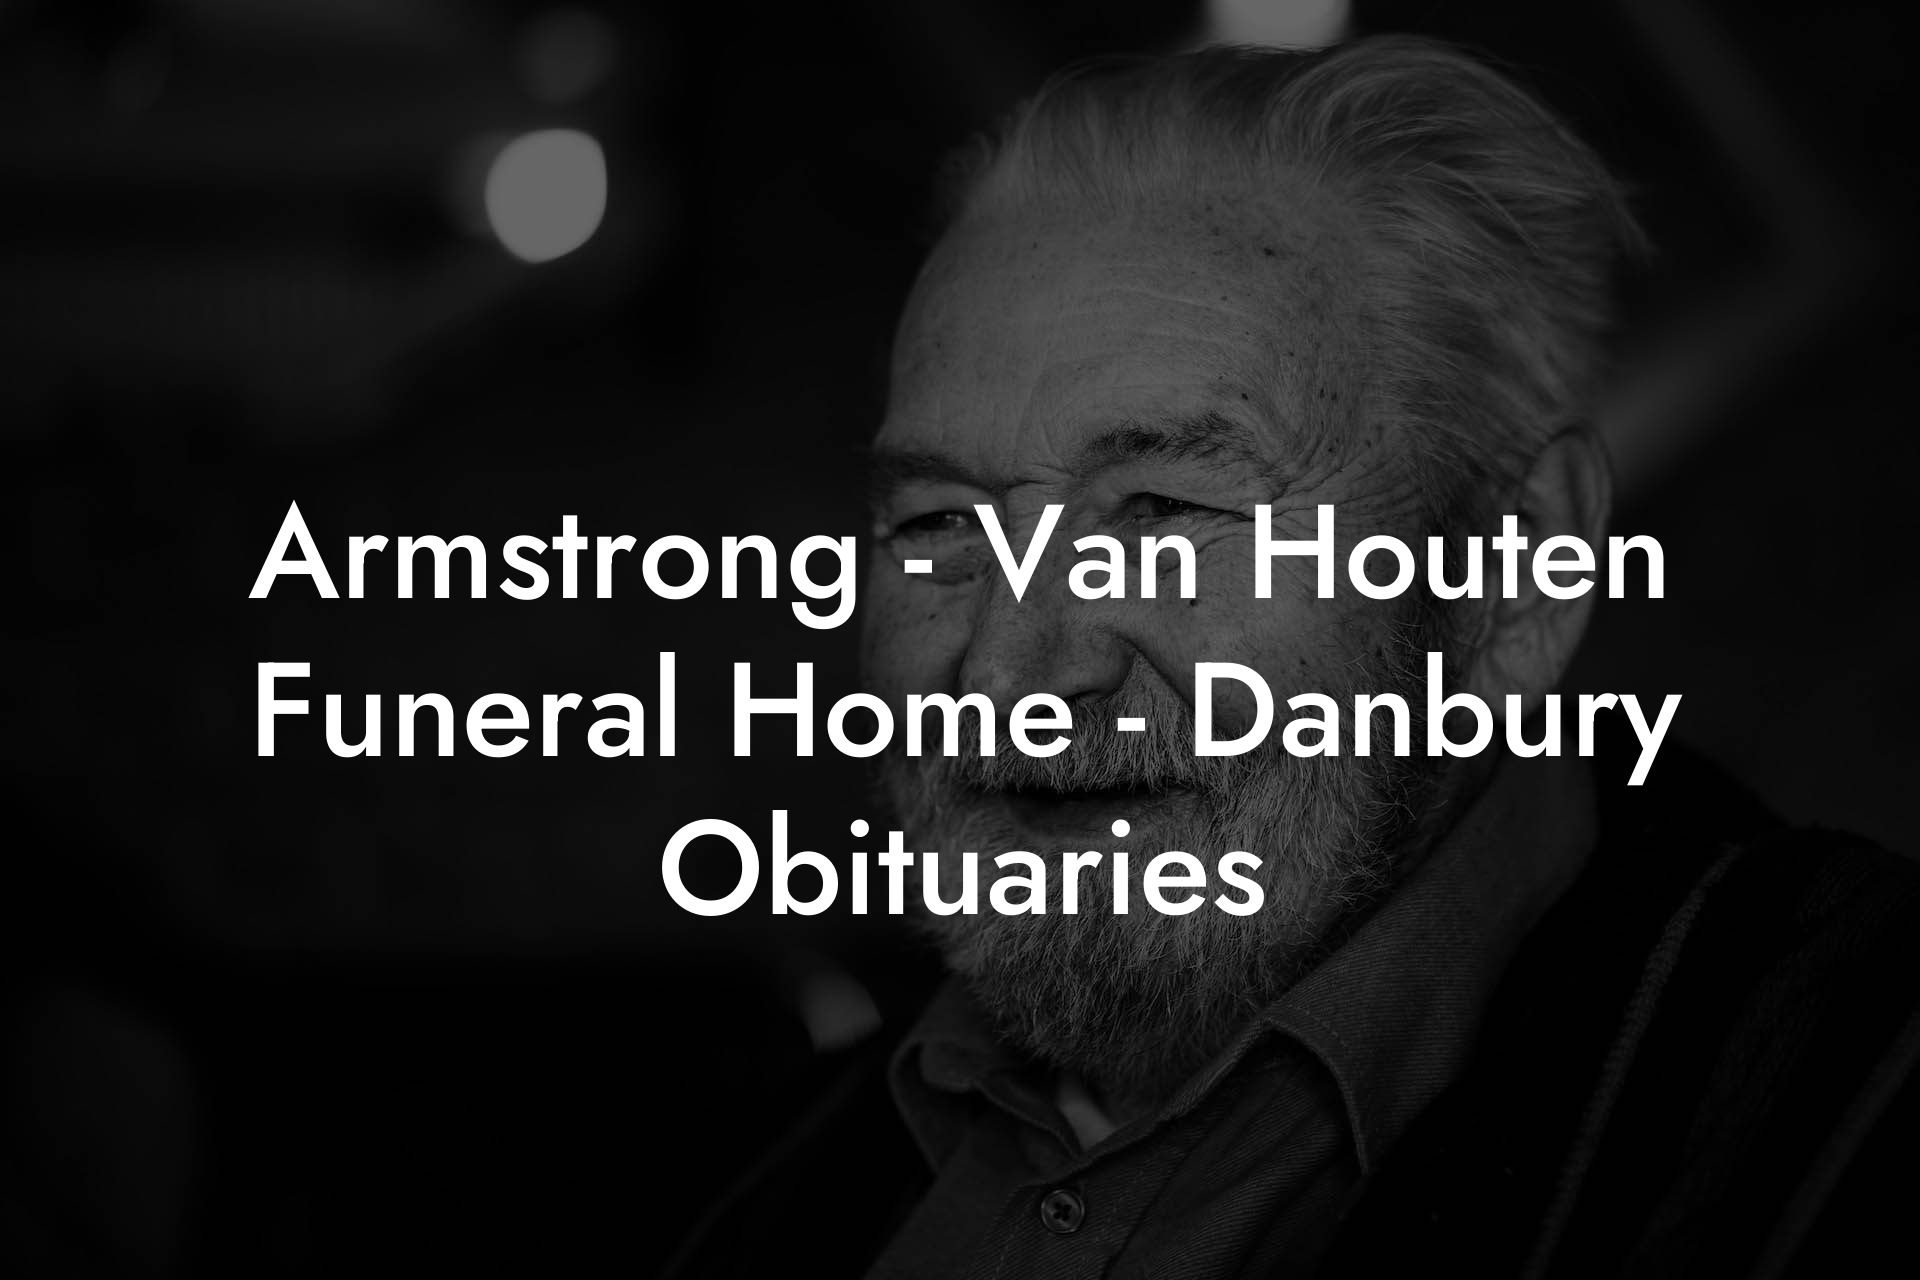 Armstrong - Van Houten Funeral Home - Danbury Obituaries